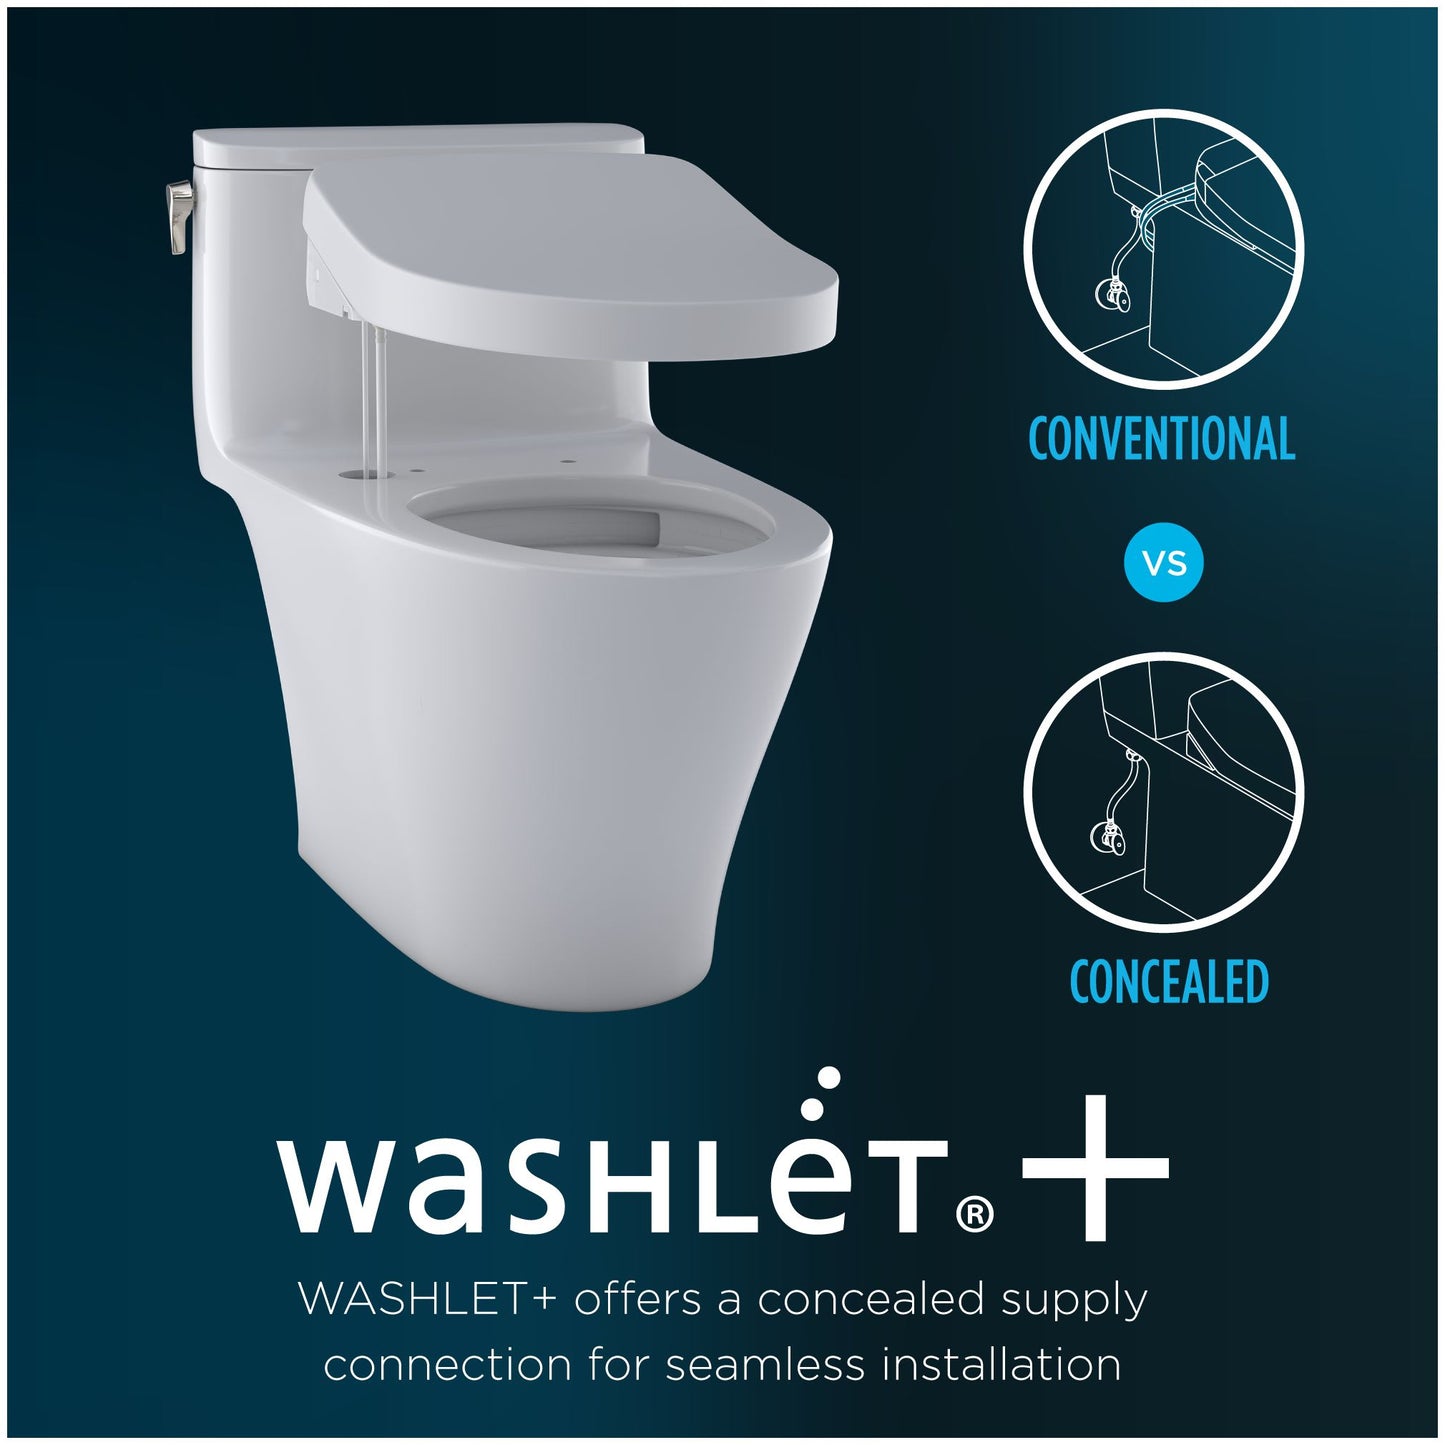 MW4463084CEMGN#01 - Aquia IV Washlet+ C5 Two Piece Toilet - 1.28 / 0.9 GPF - White